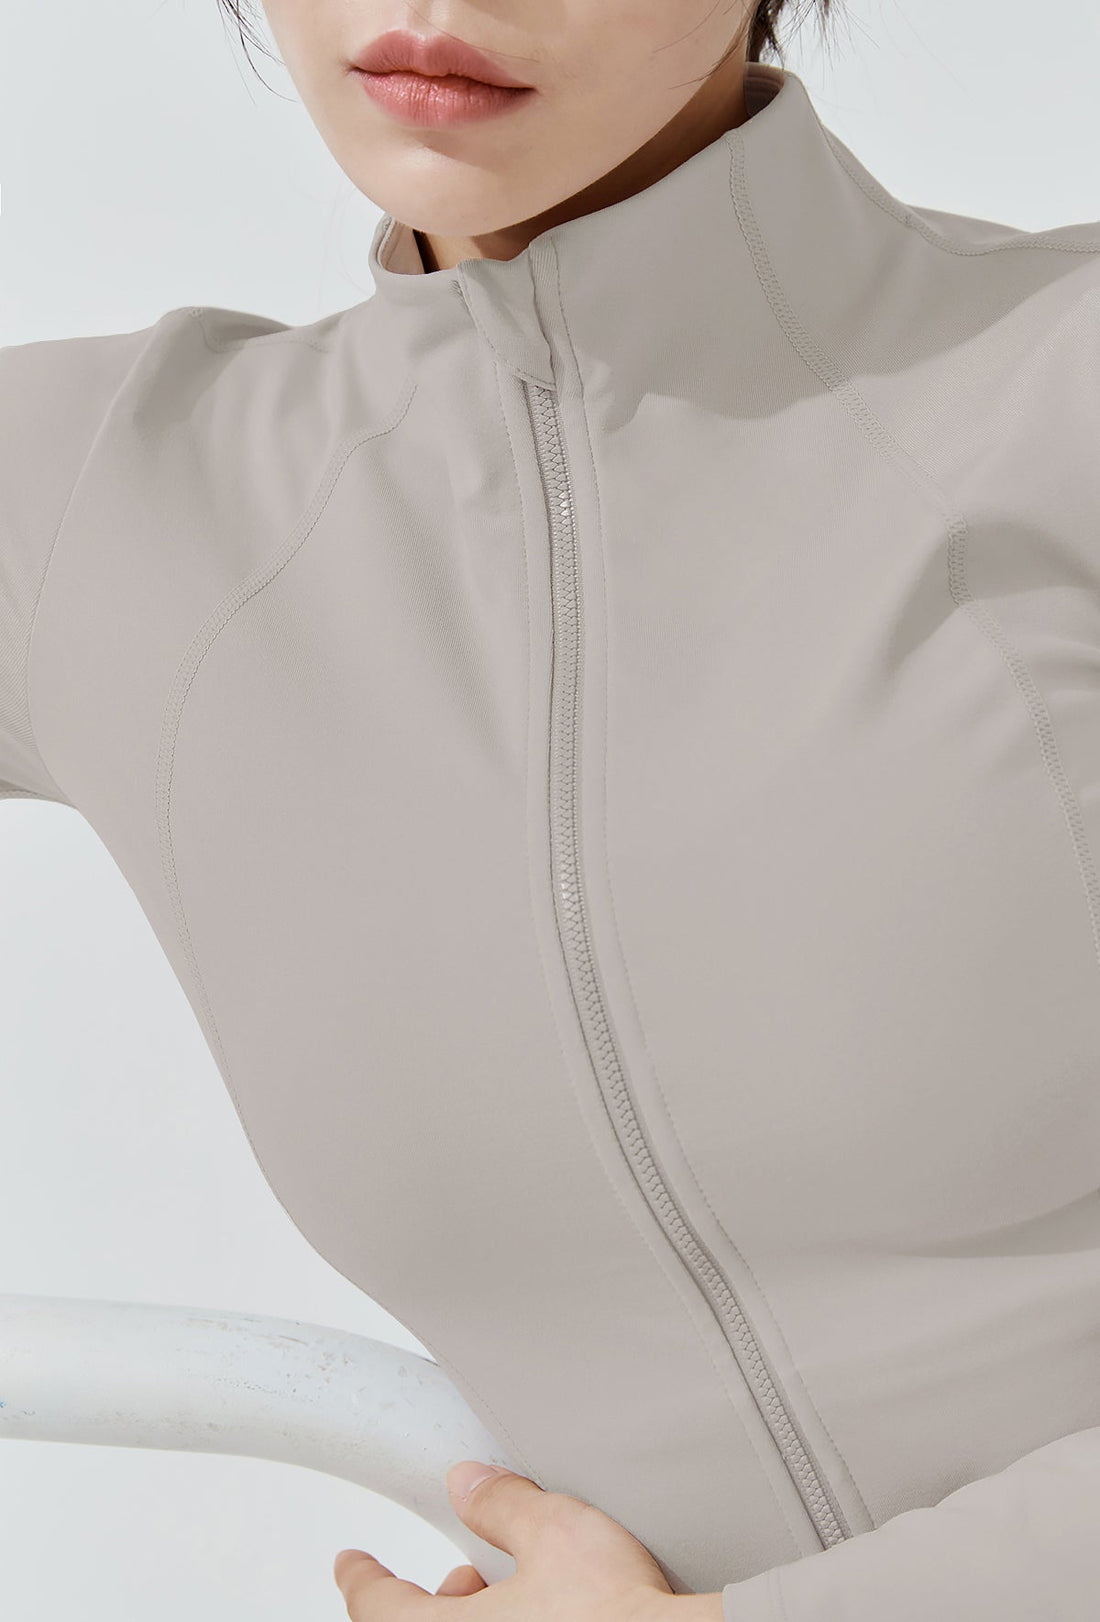 XELLA™ Intention Slim Fit Zip-up Jacket - Mellow Gray